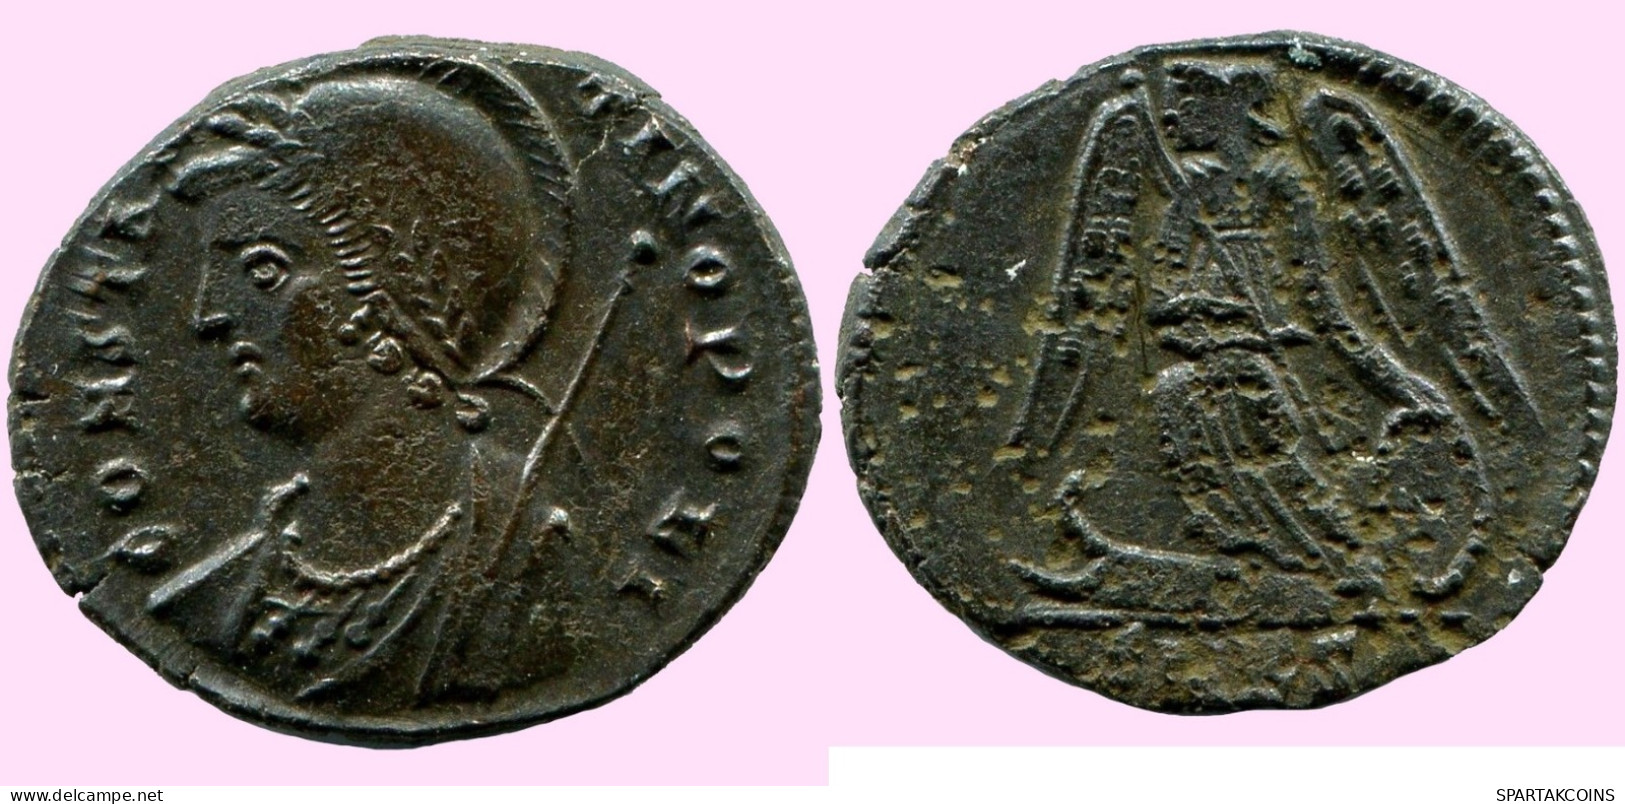 CONSTANTINUS I CONSTANTINOPOLI FOLLIS Ancient ROMAN Coin #ANC12019.25.U.A - The Christian Empire (307 AD To 363 AD)